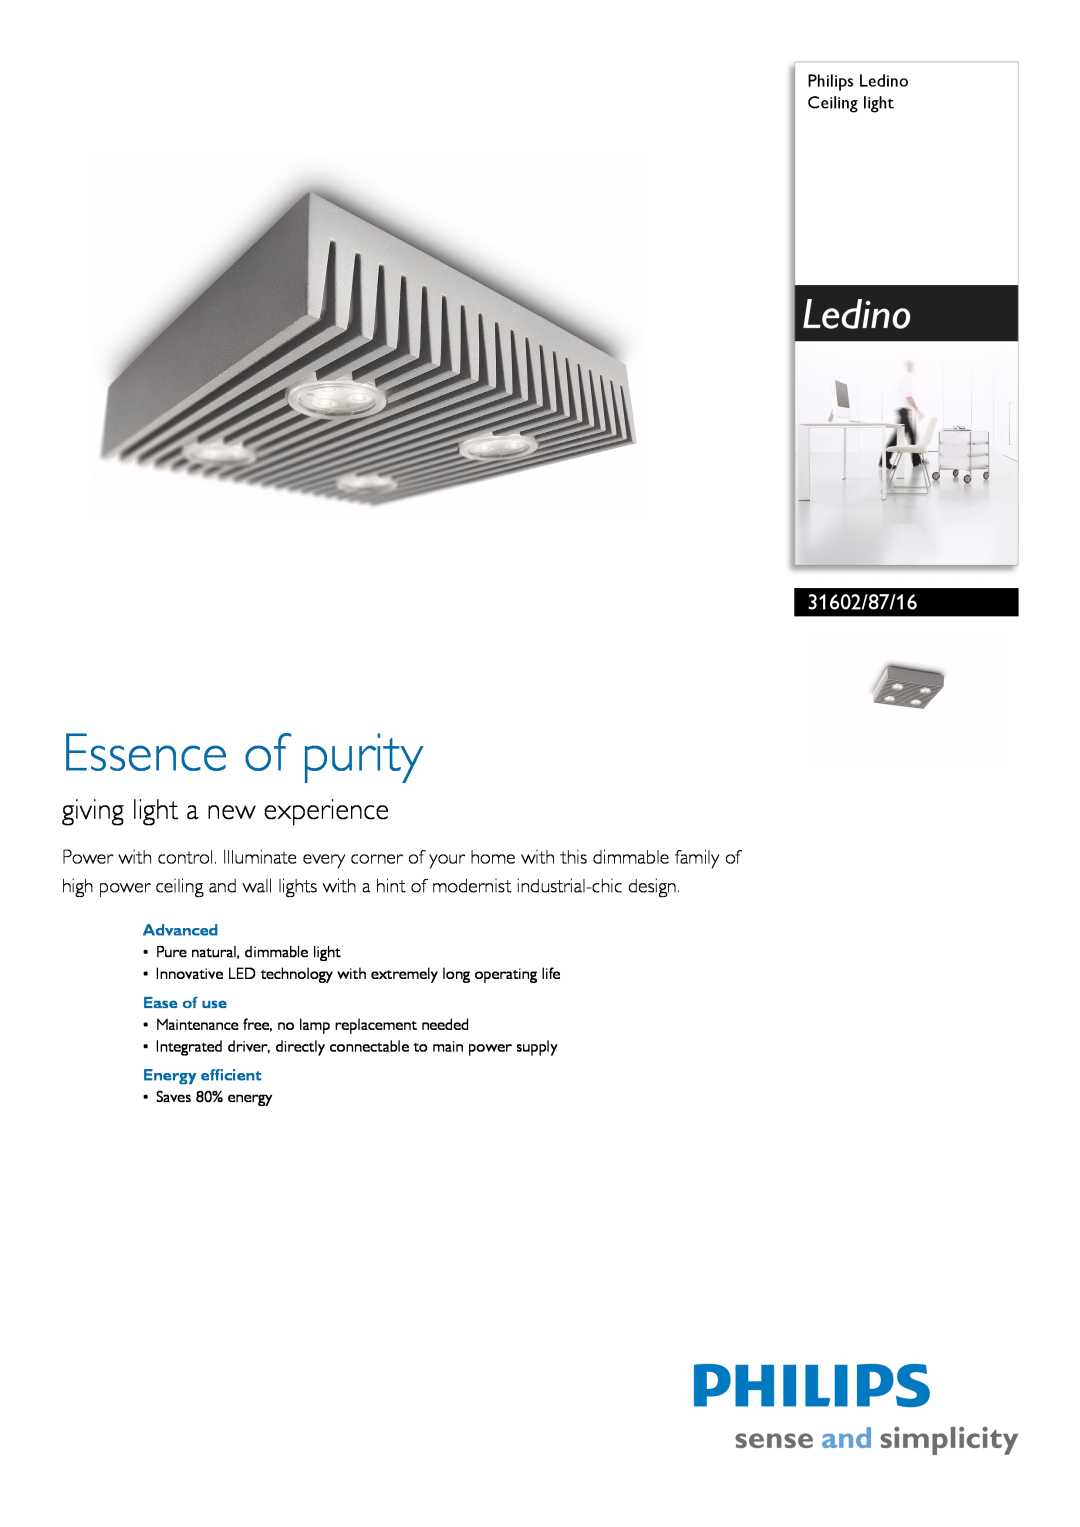 Philips 31602/87/16 manual Philips Ledino Ceiling light, Advanced, Ease of use, Energy efficient, Essence of purity 